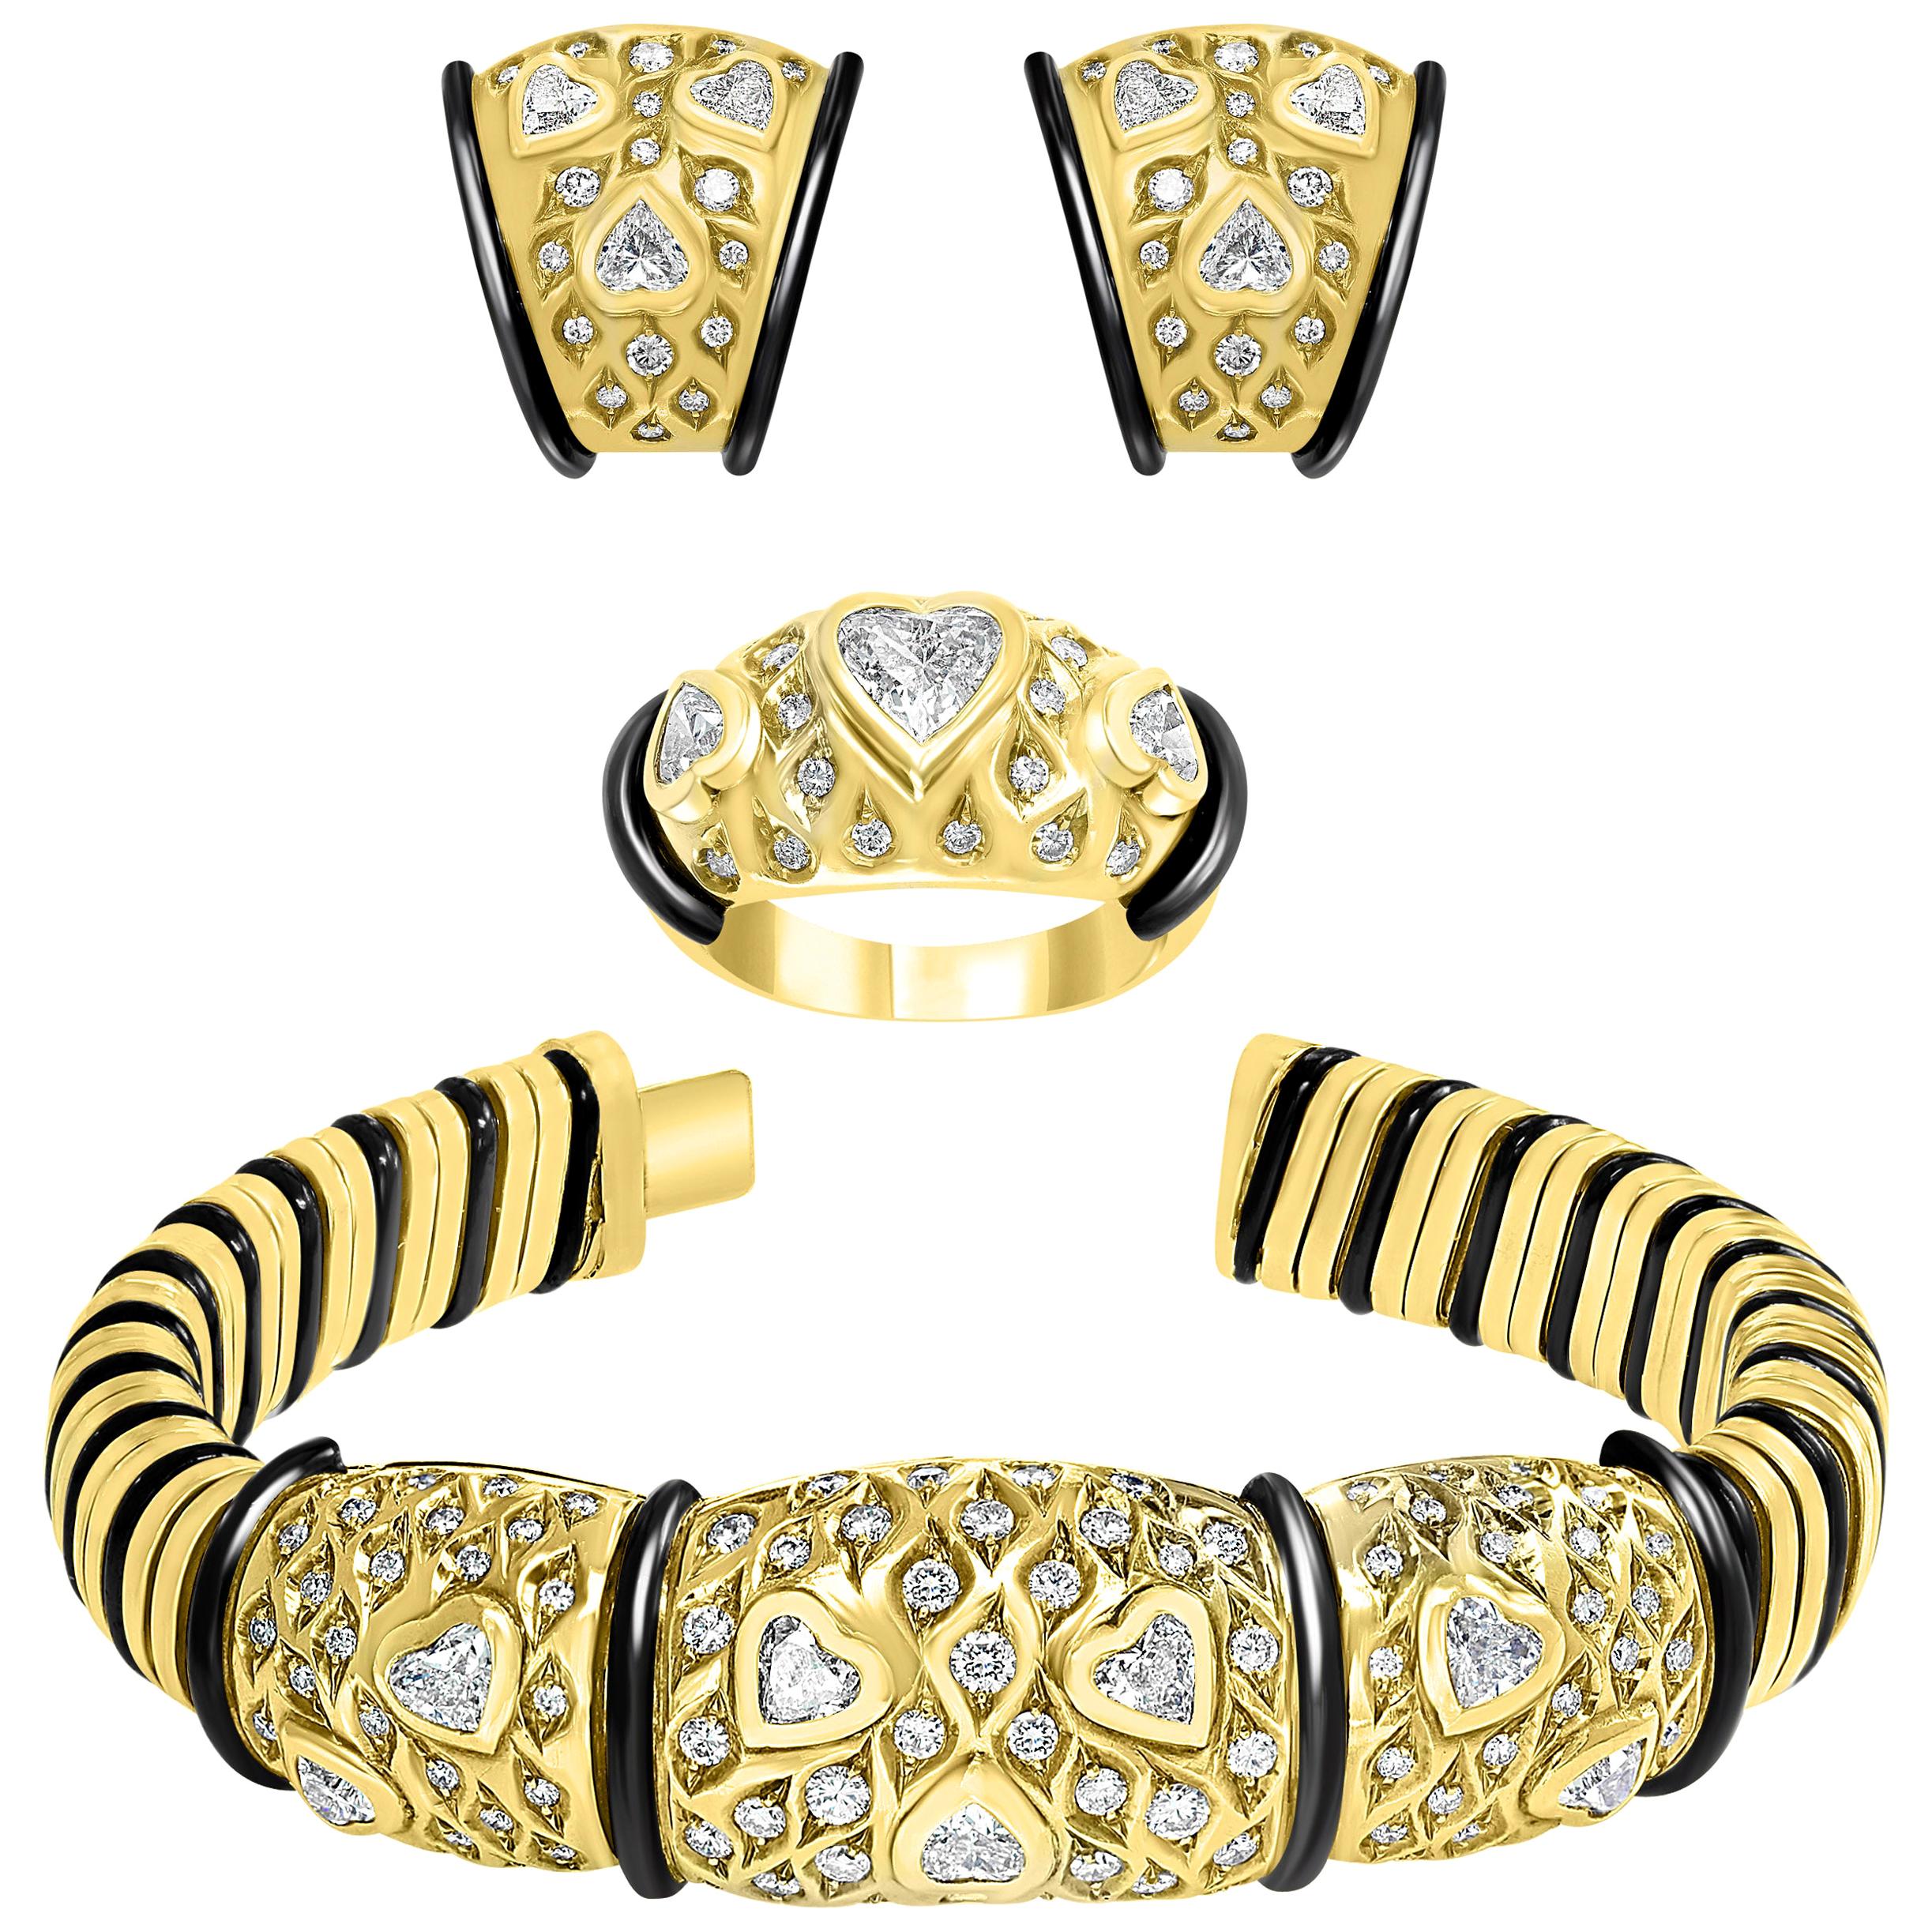 Leporttie Diamond Bangle Ring Earring Three-Piece Set in 18 Karat Yellow Gold